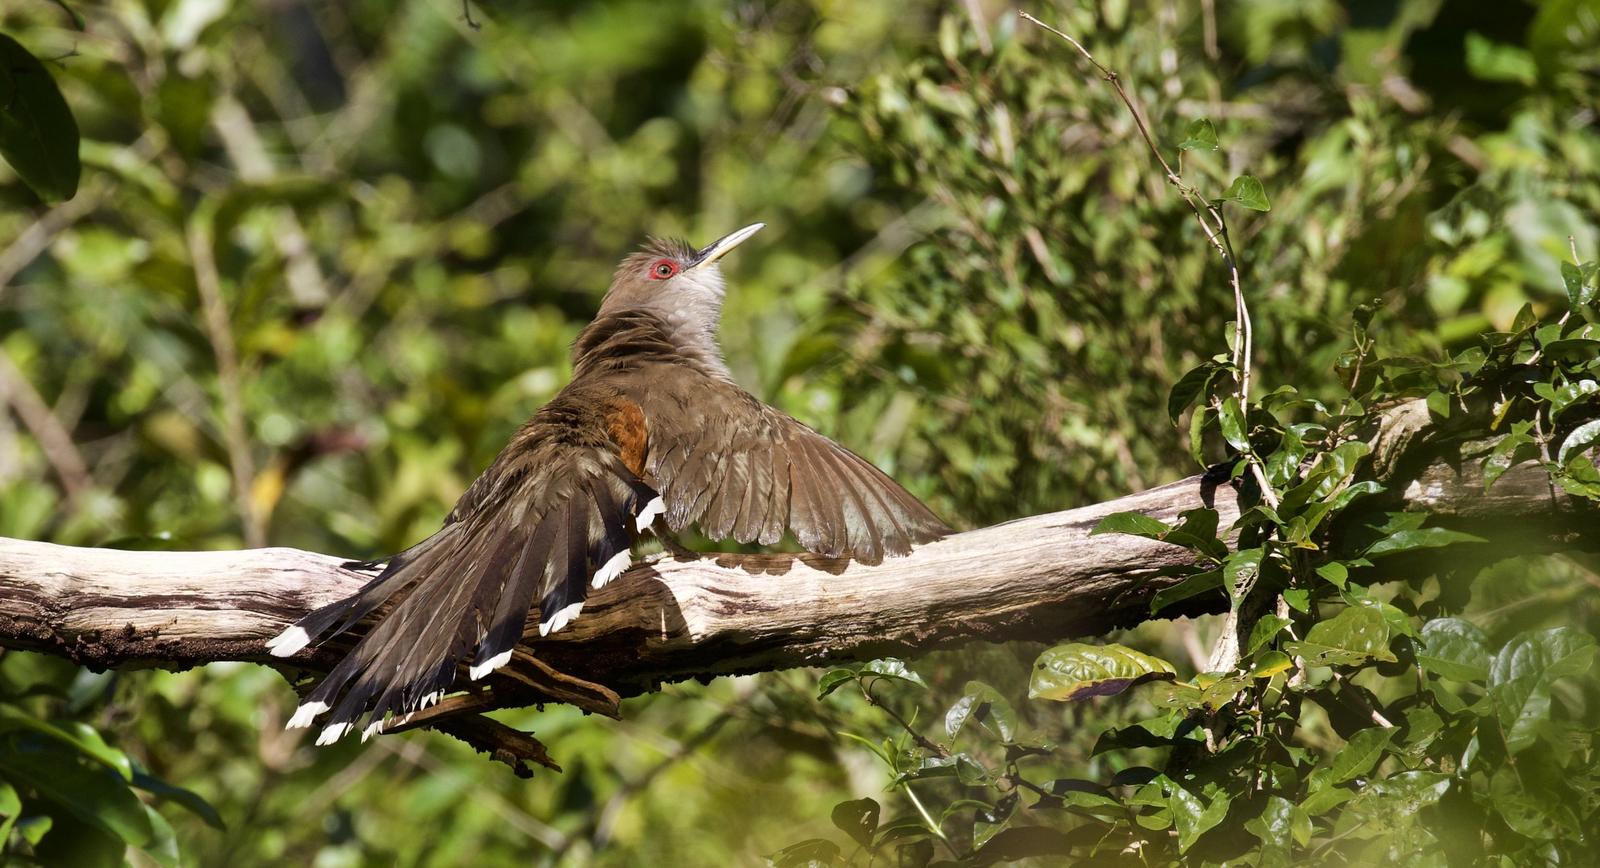 Puerto Rican Lizard-Cuckoo Photo by  